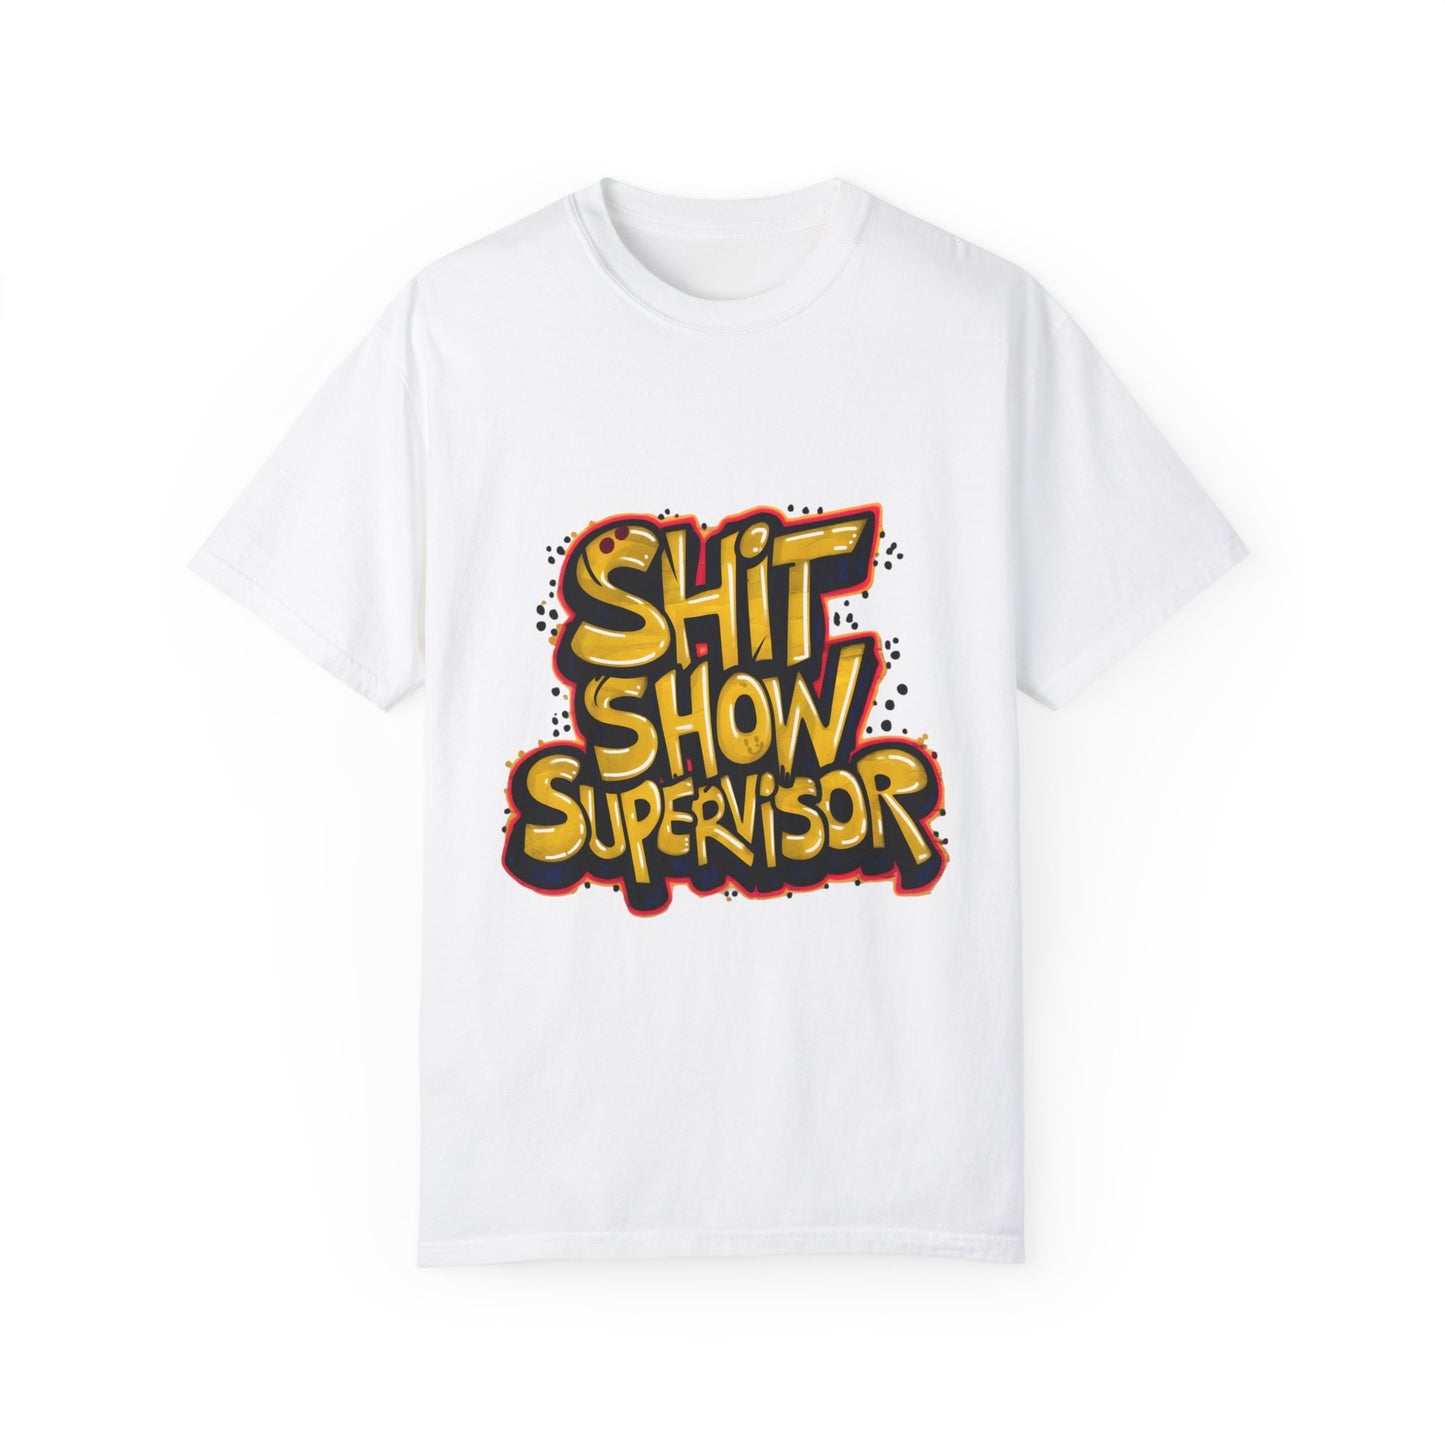 Shit Show Supervisor Urban Sarcastic Graphic Unisex Garment Dyed T-shirt Cotton Funny Humorous Graphic Soft Premium Unisex Men Women White T-shirt Birthday Gift-3